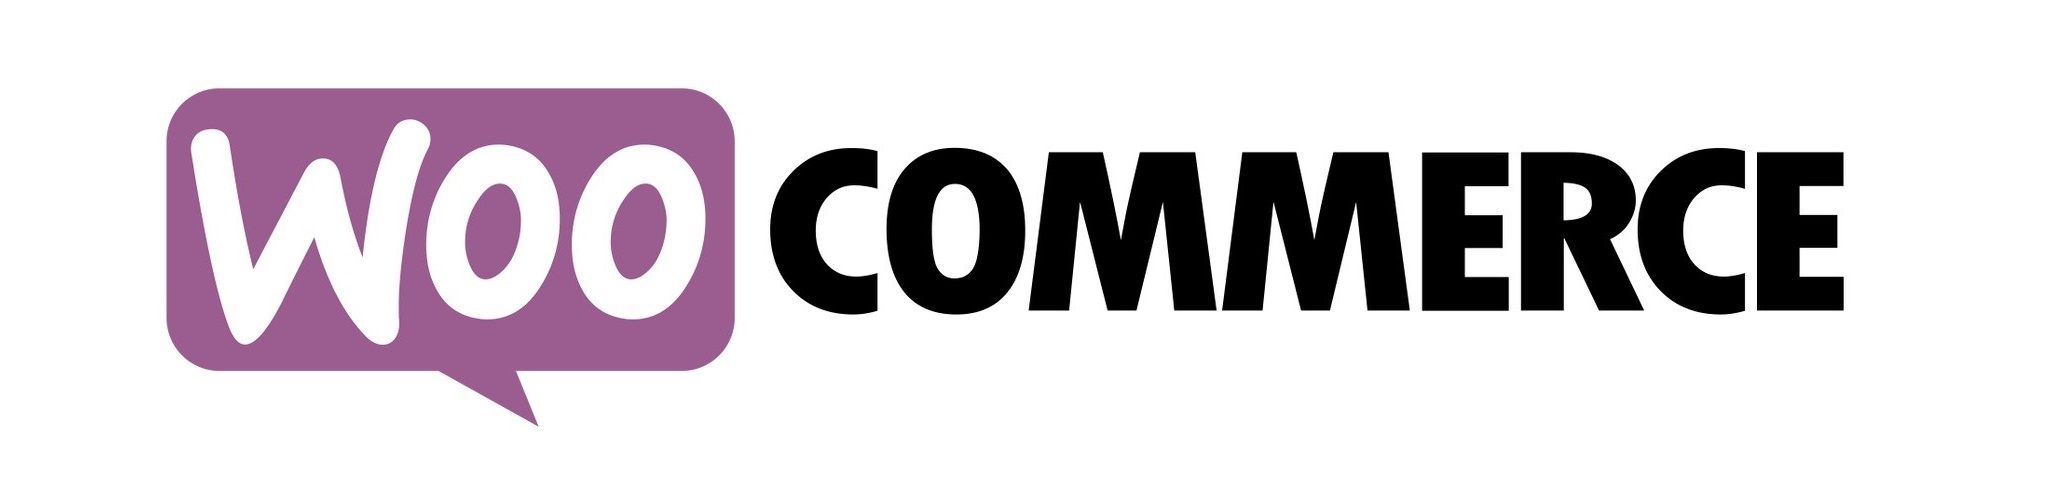 Woocommerce Review Bluehost ecommerce platform